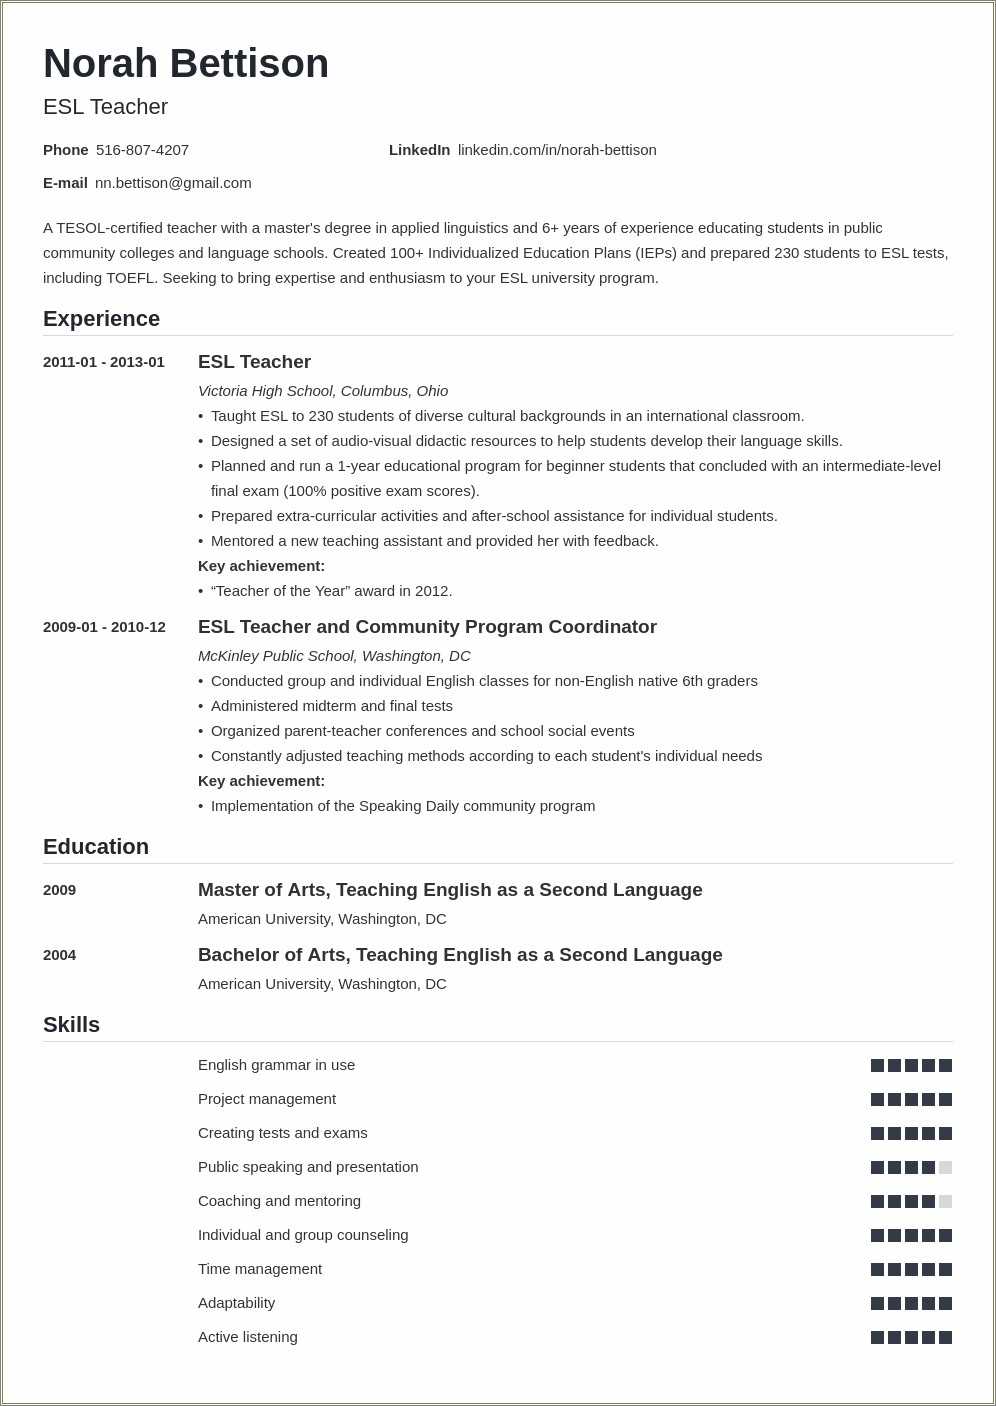 free-esl-teacher-resume-templates-resume-example-gallery